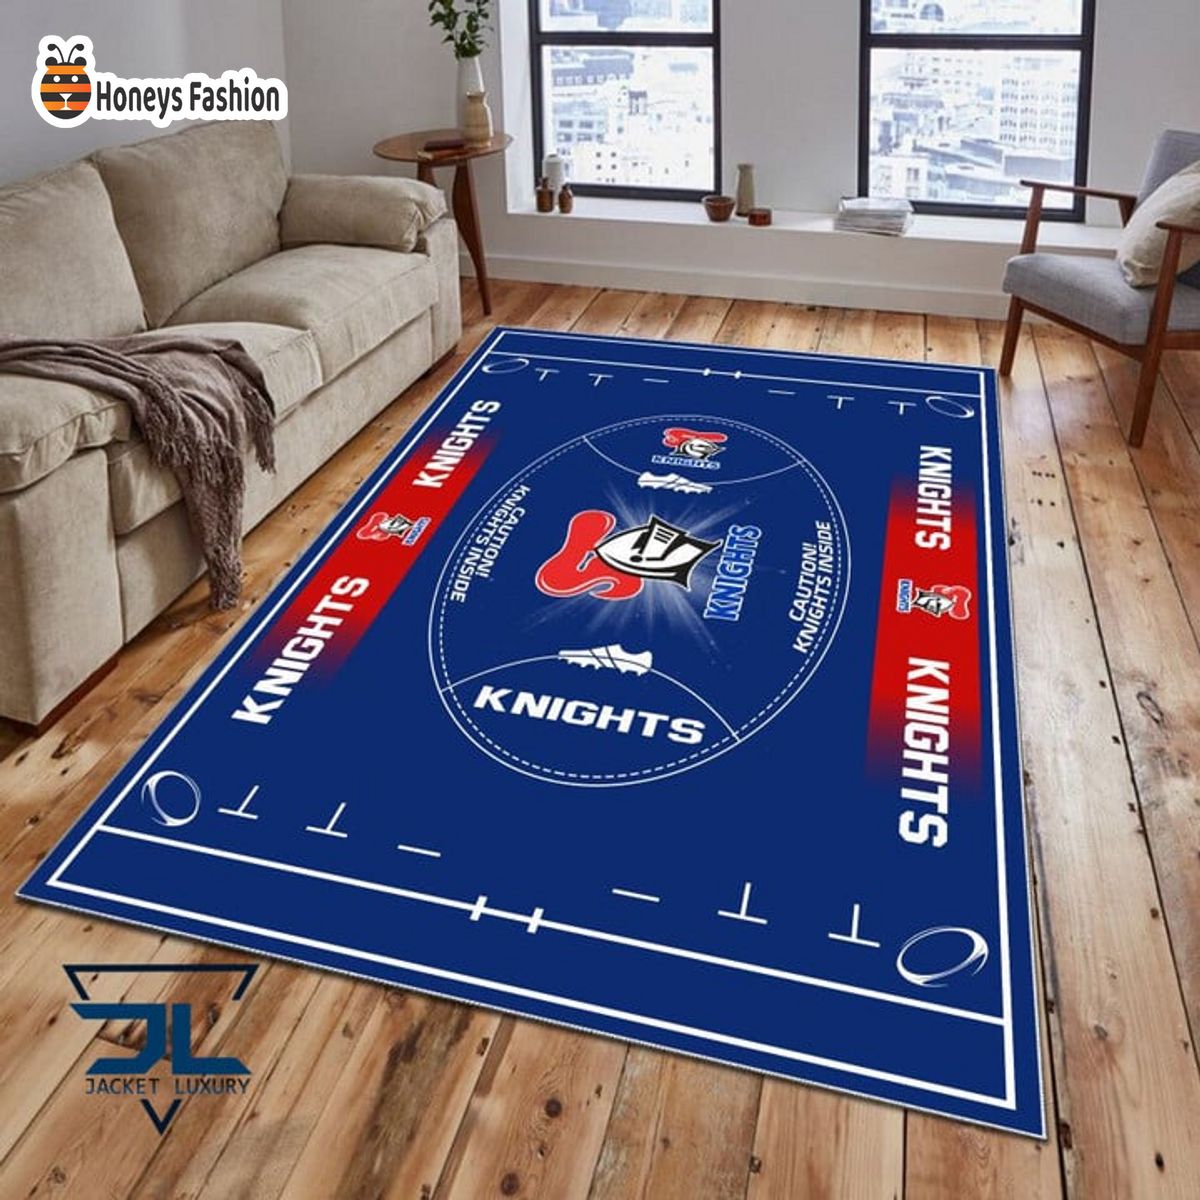 Newcastle Knights NRL Rug Carpet